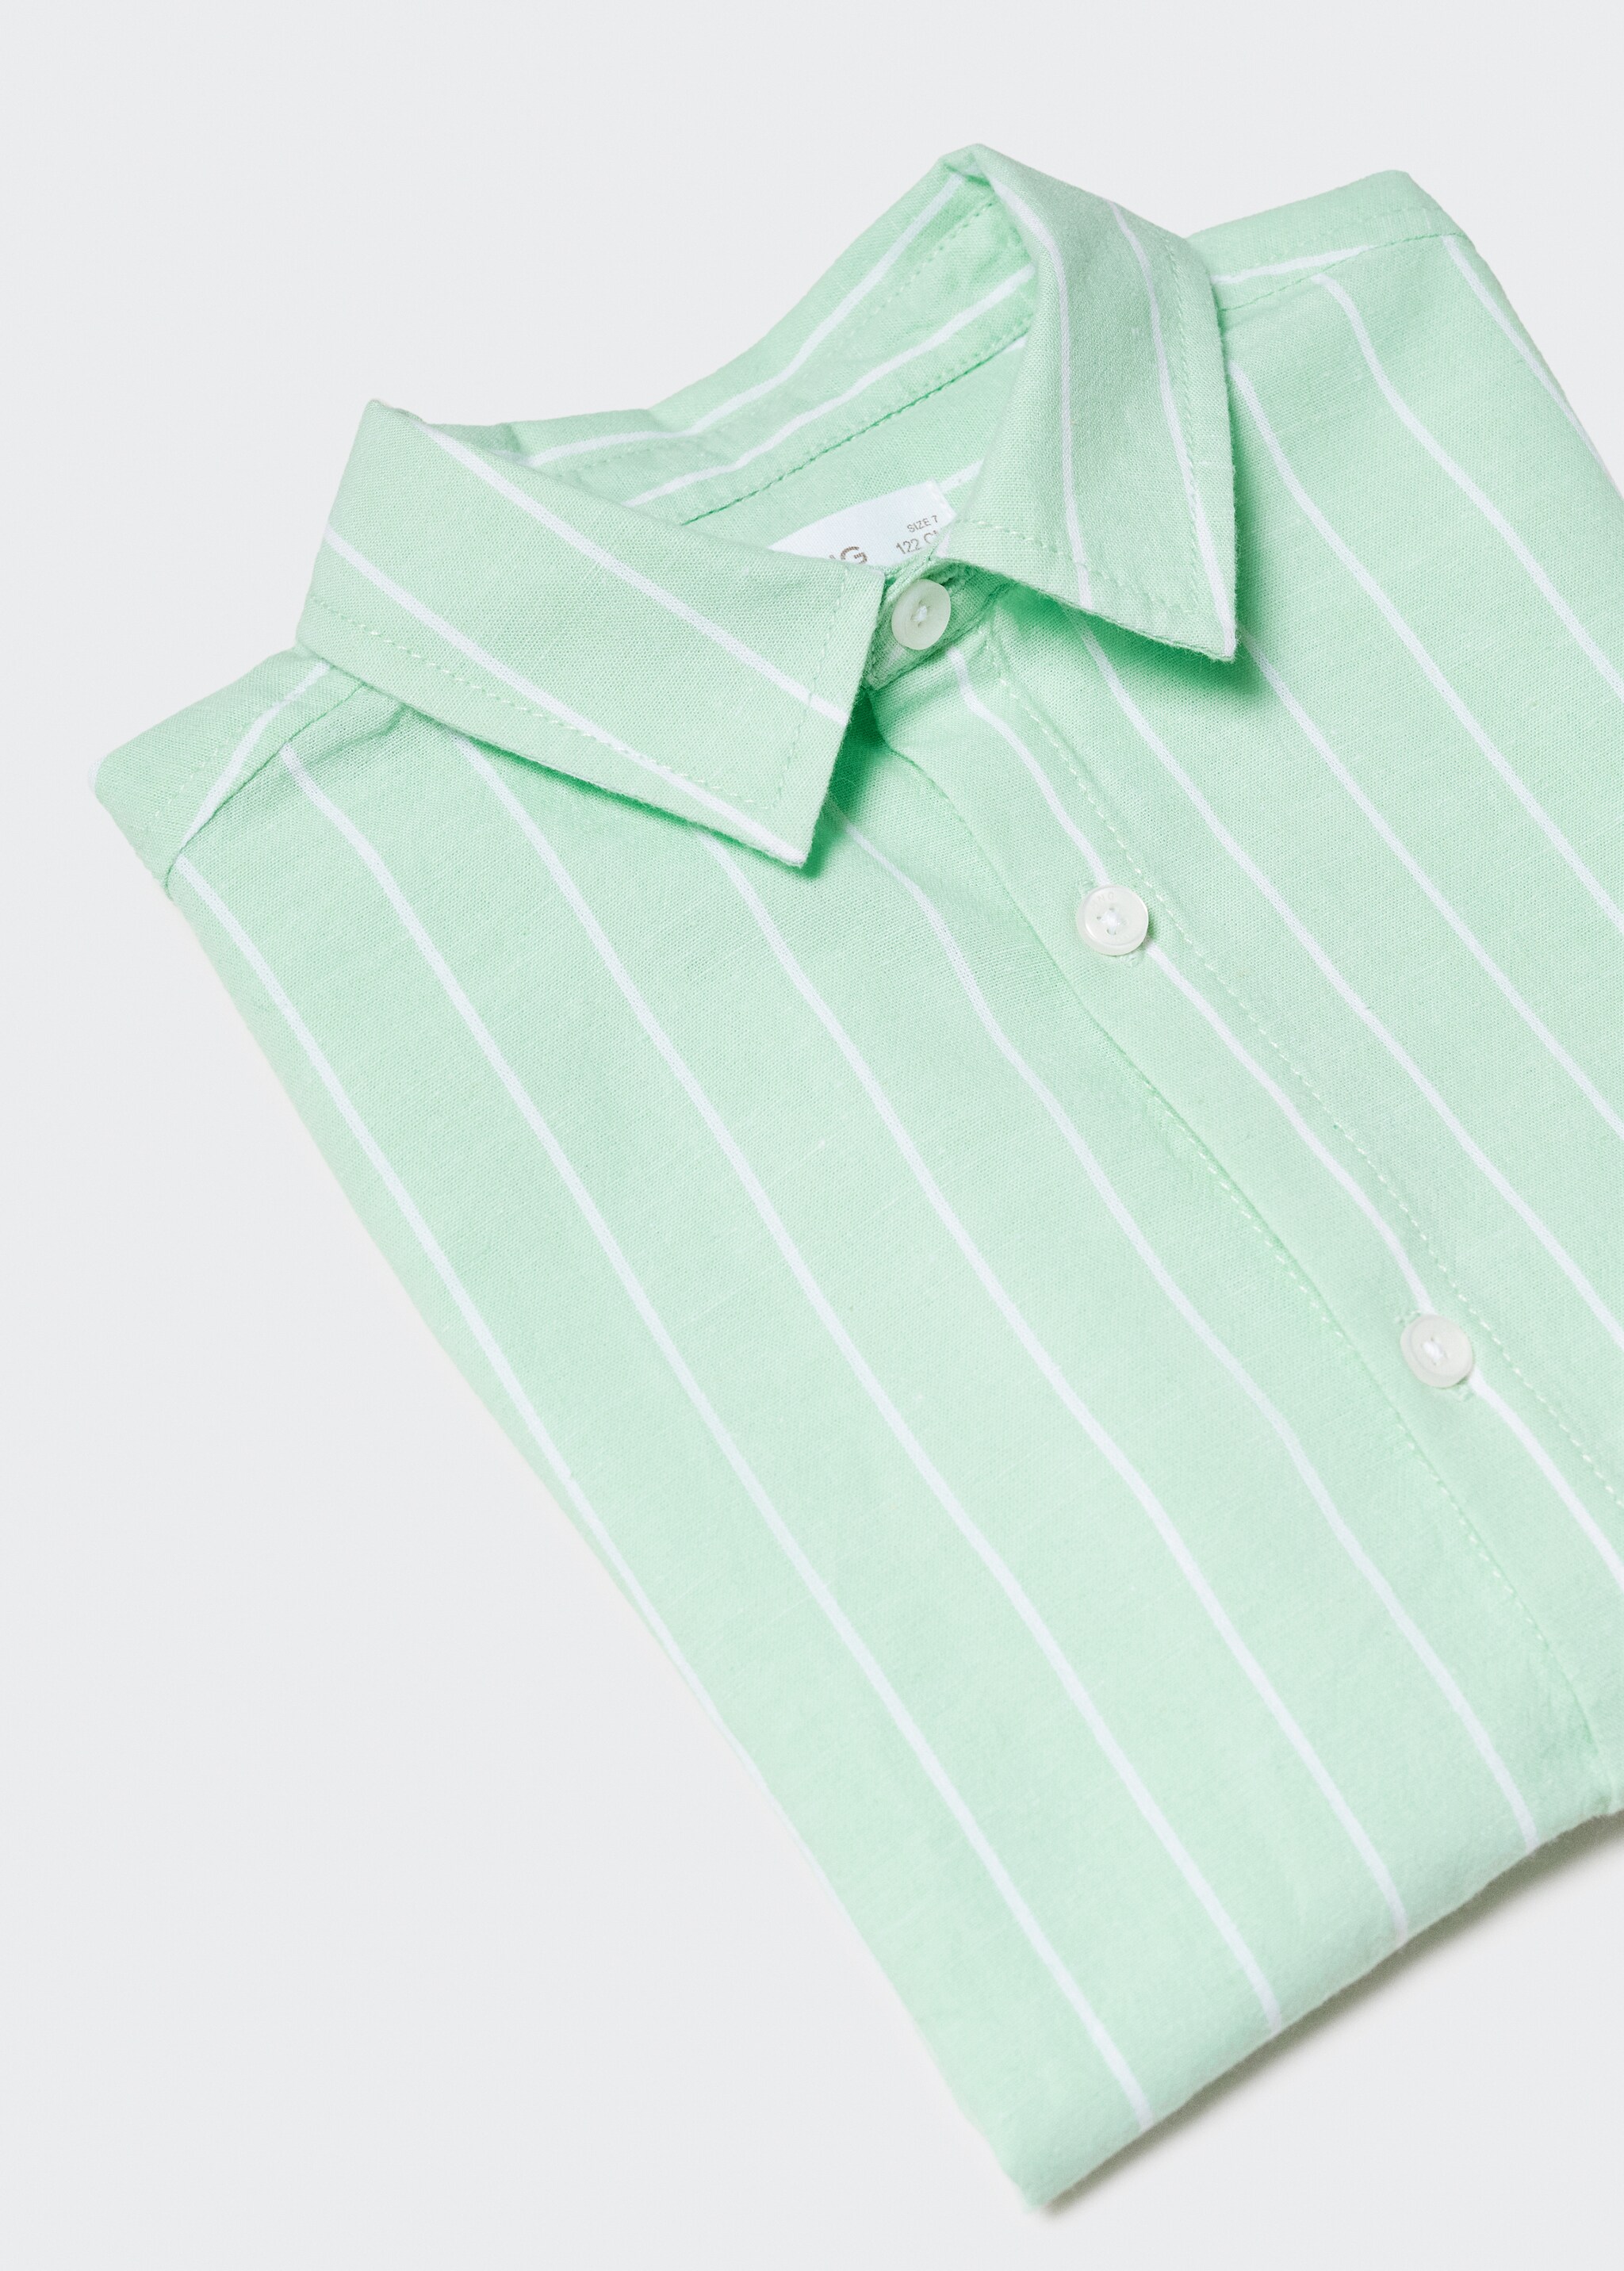 Striped cotton linen shirt - Details of the article 8